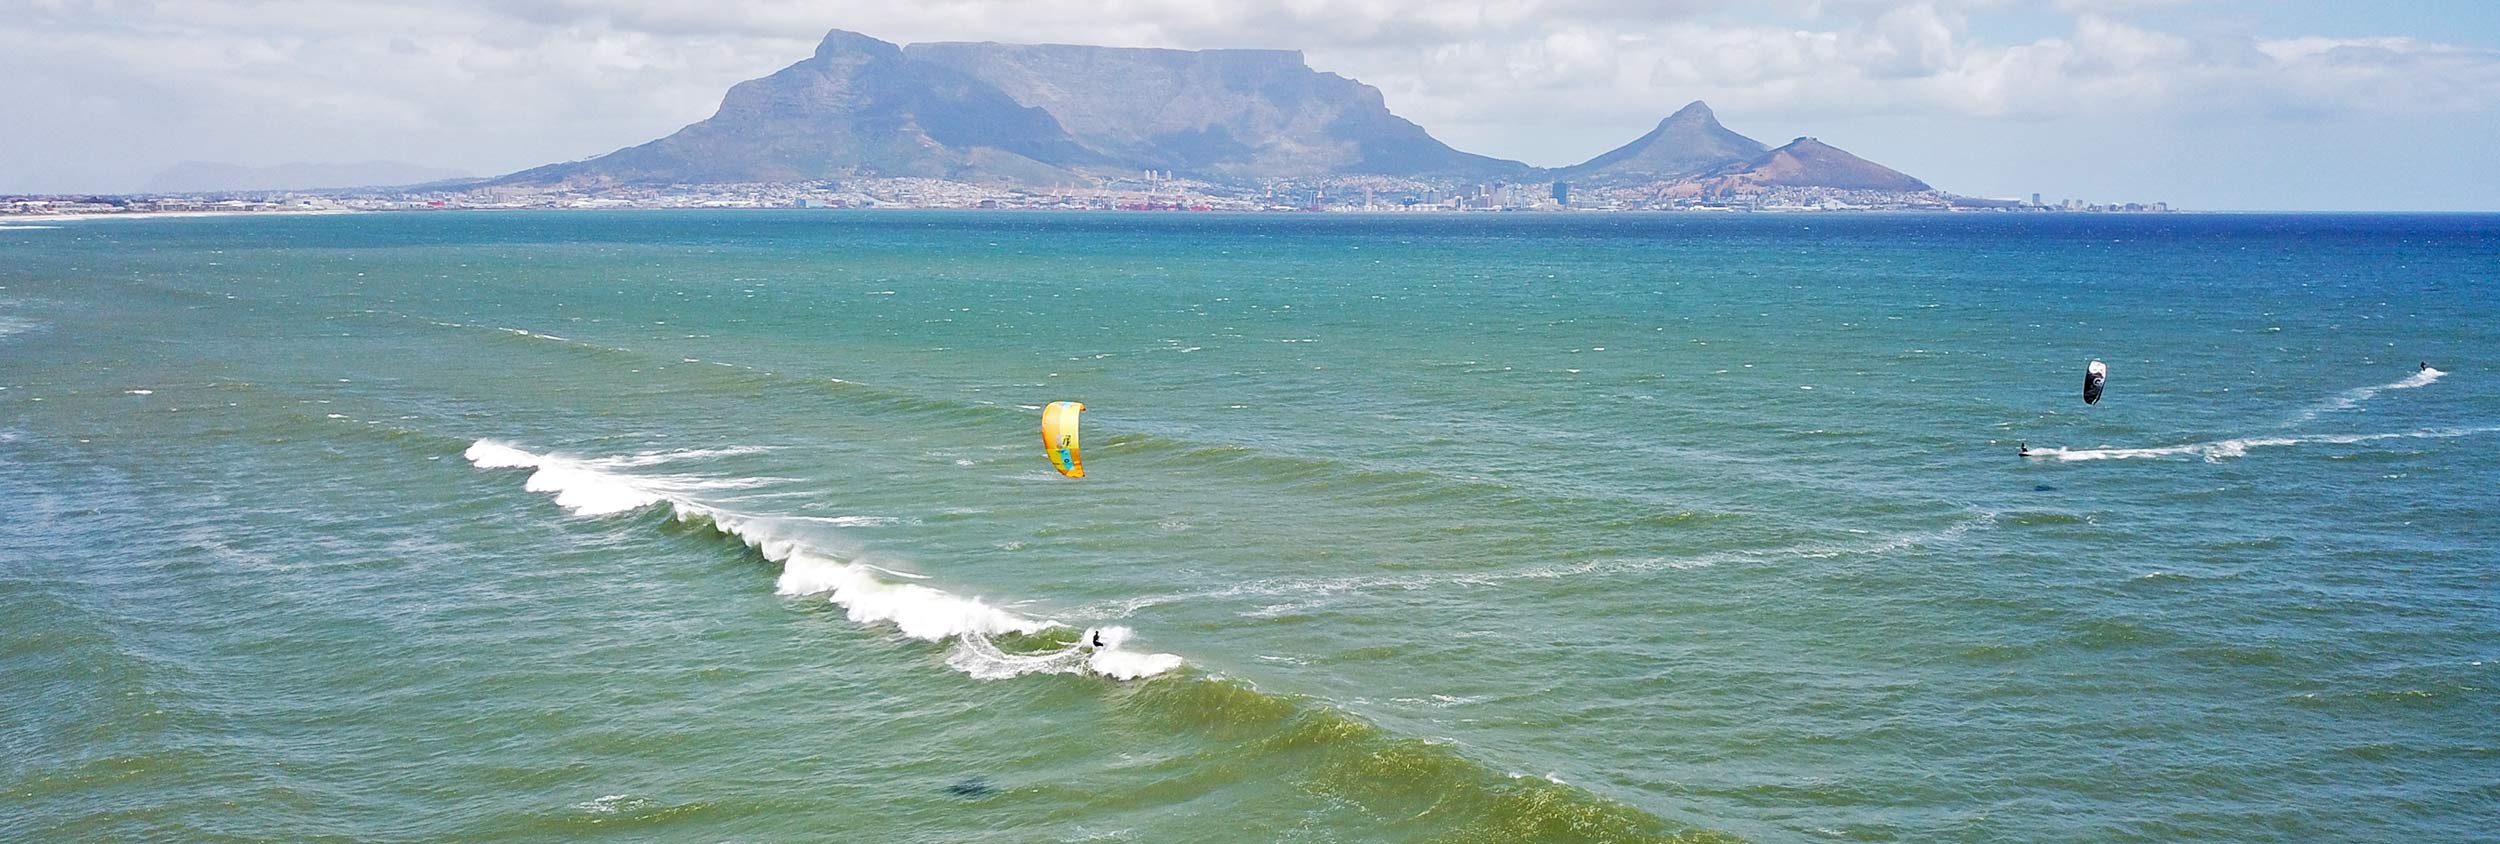 Kitesurfing at Sunset Beach in Cape Town